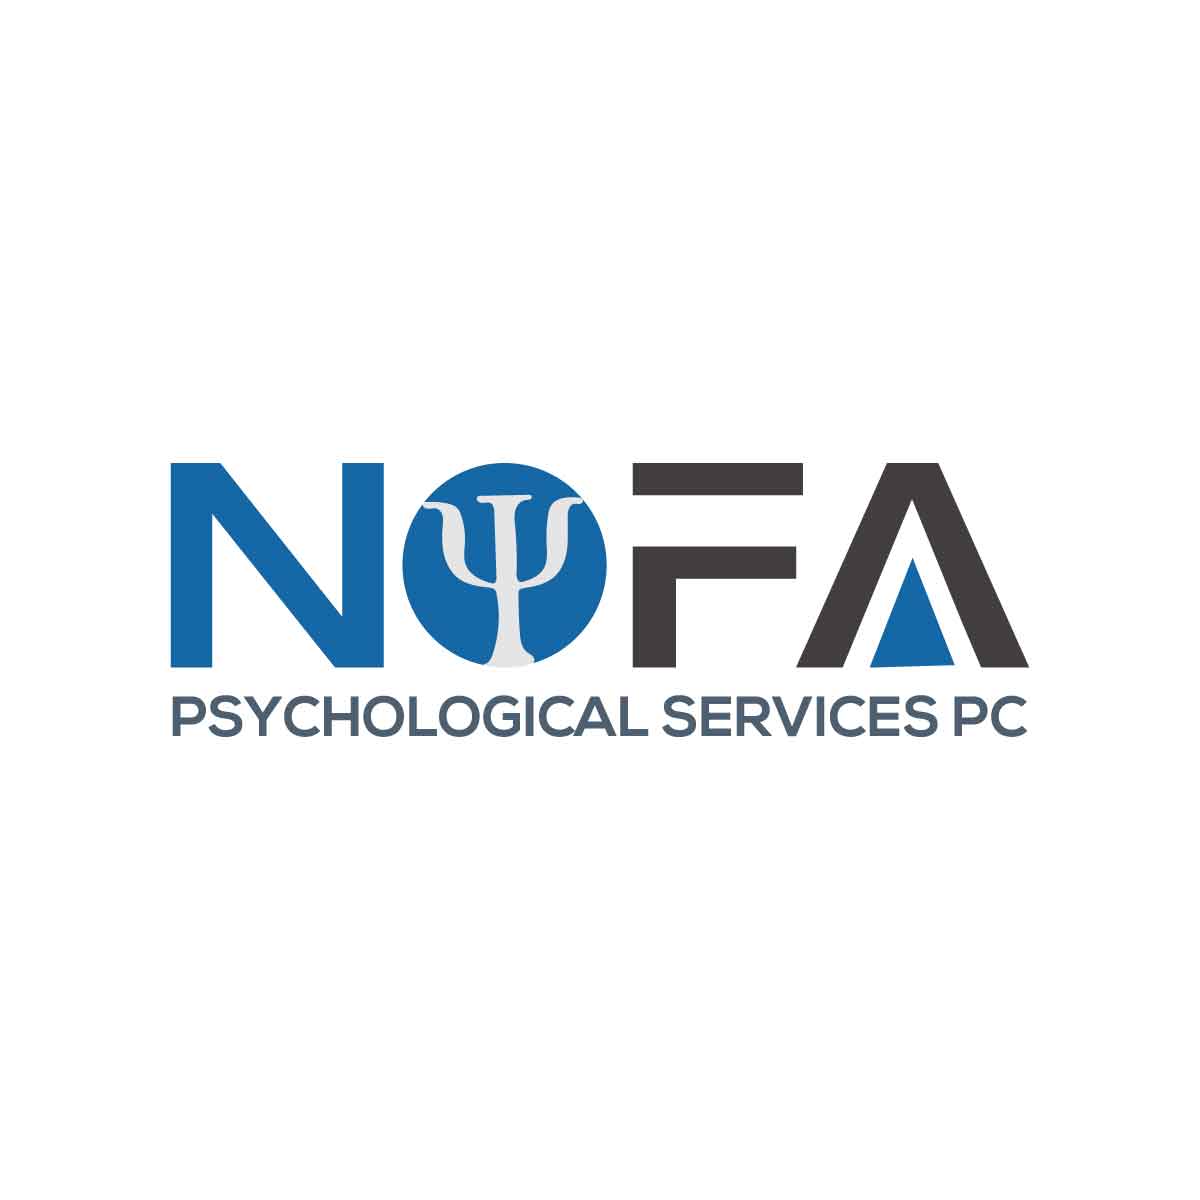 Psychological-Services-Pc-1